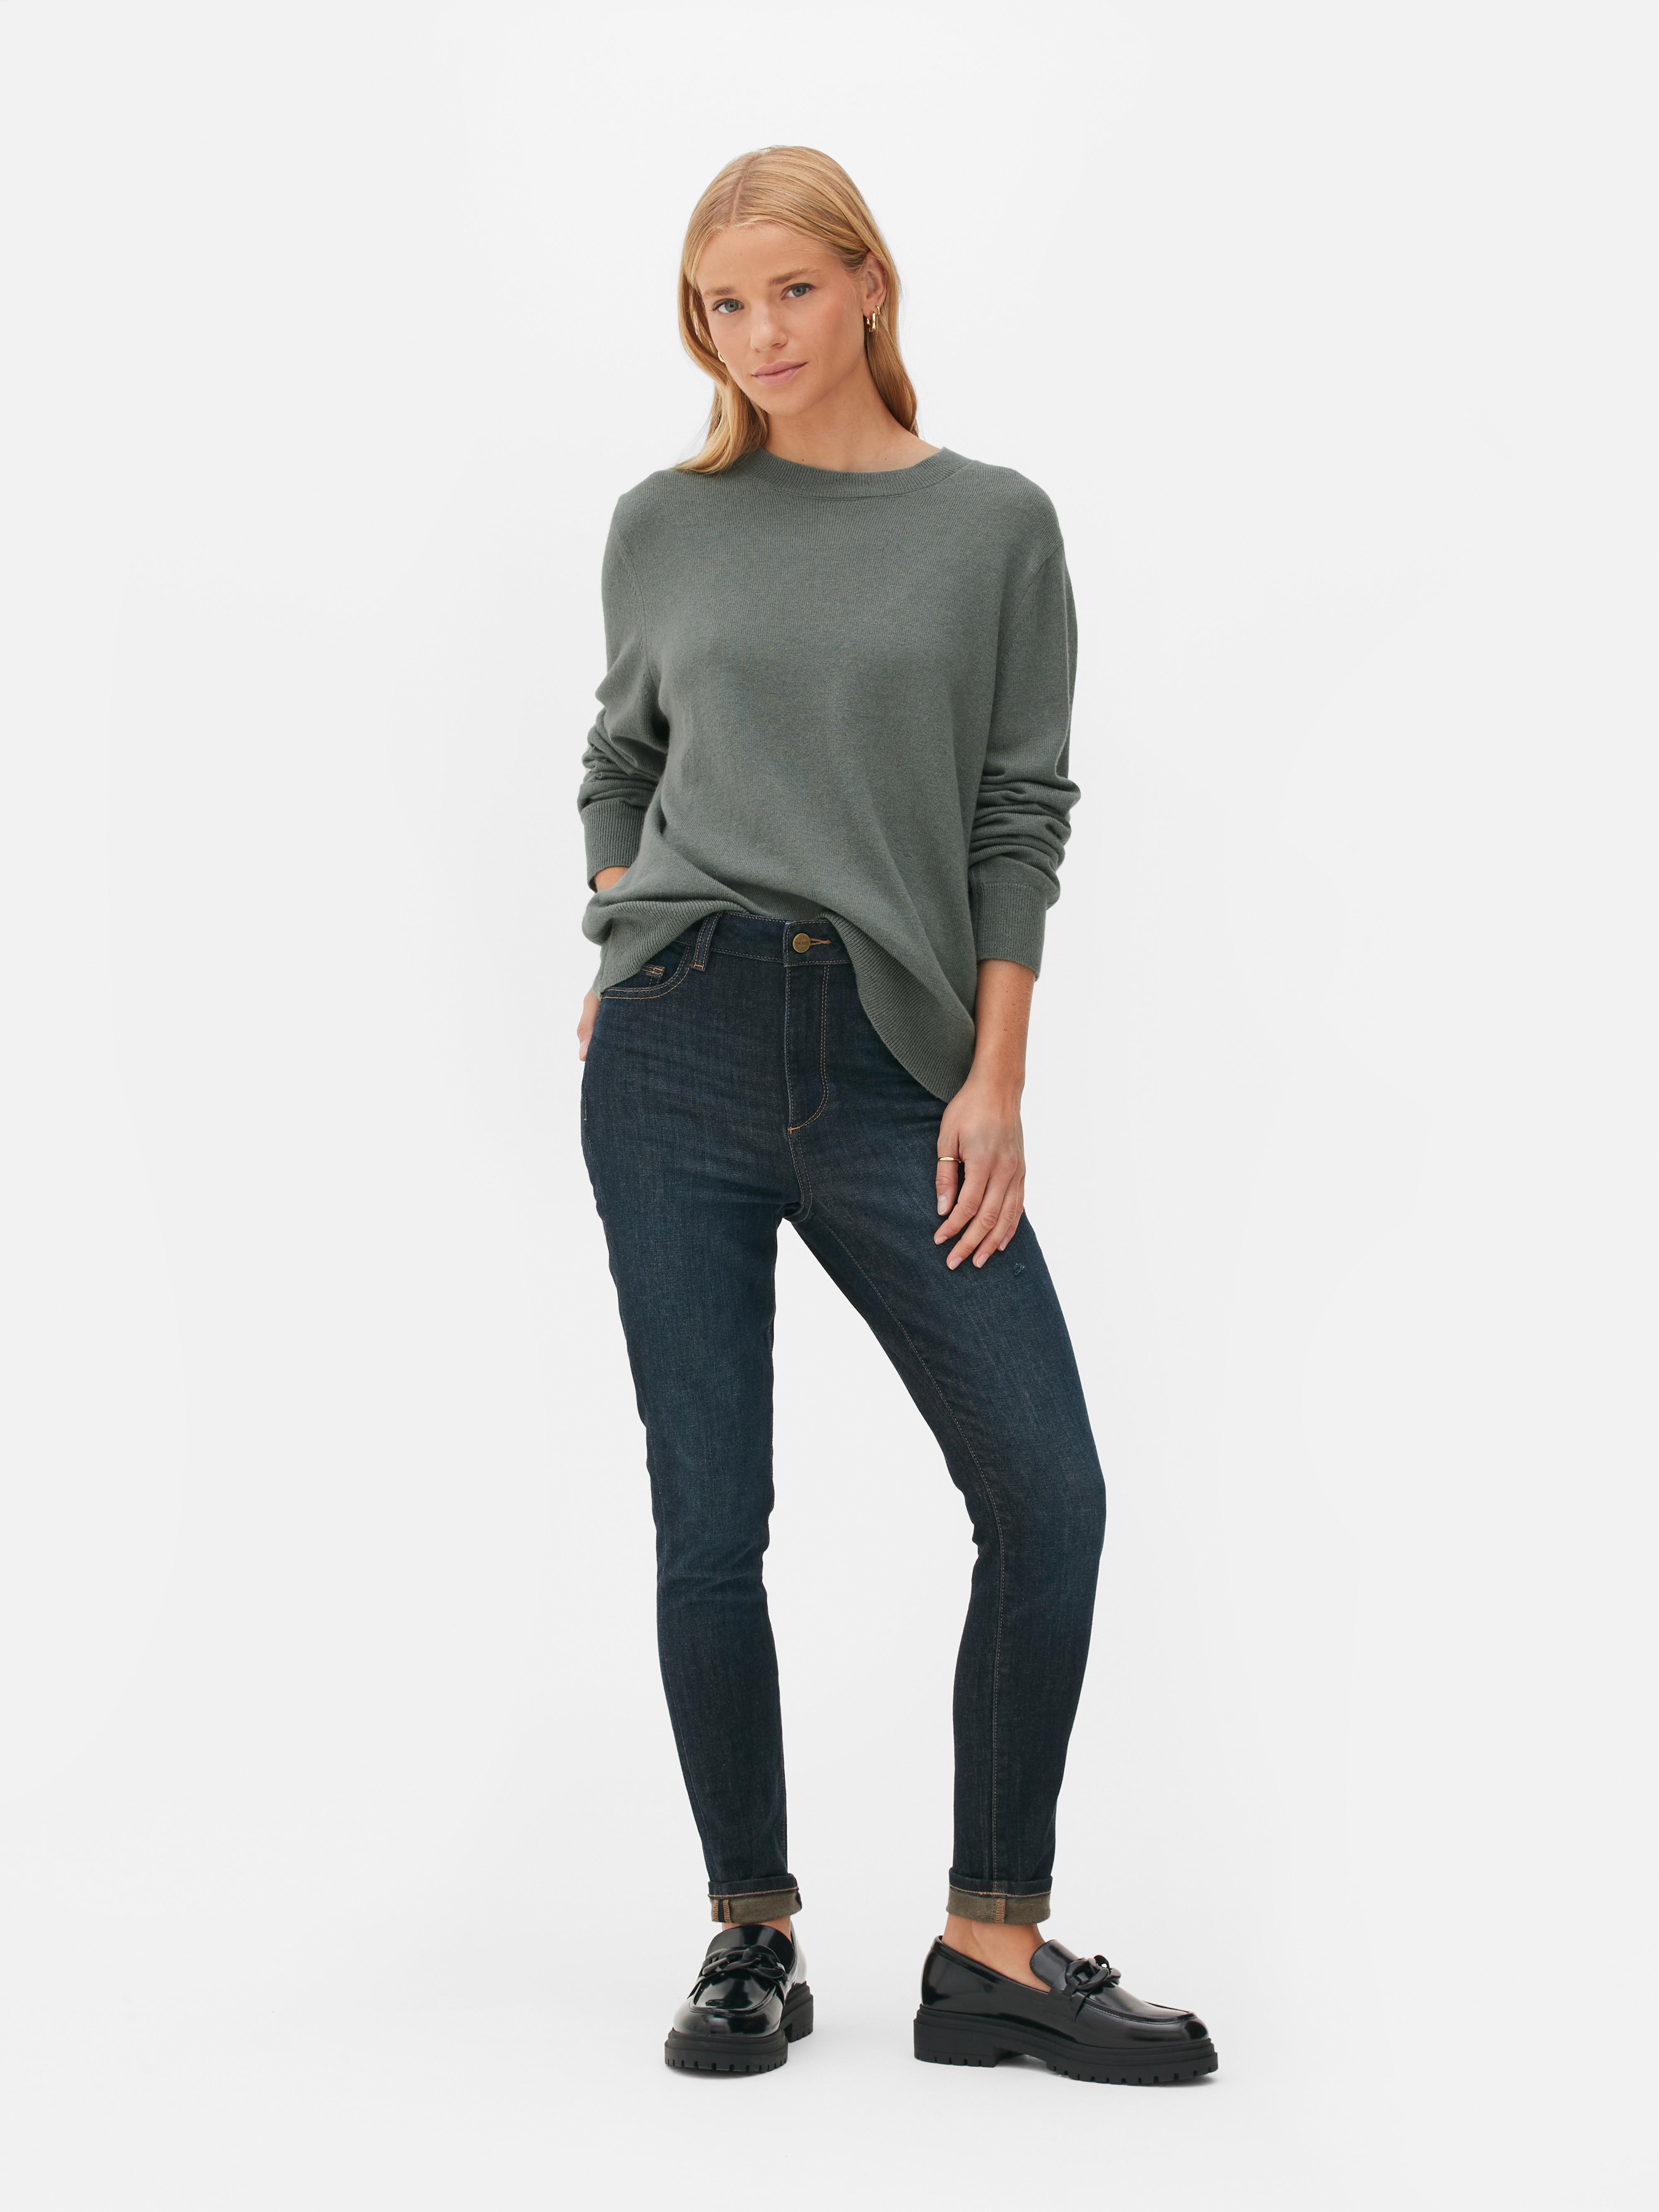 Viscose/Wool Blend Sweater